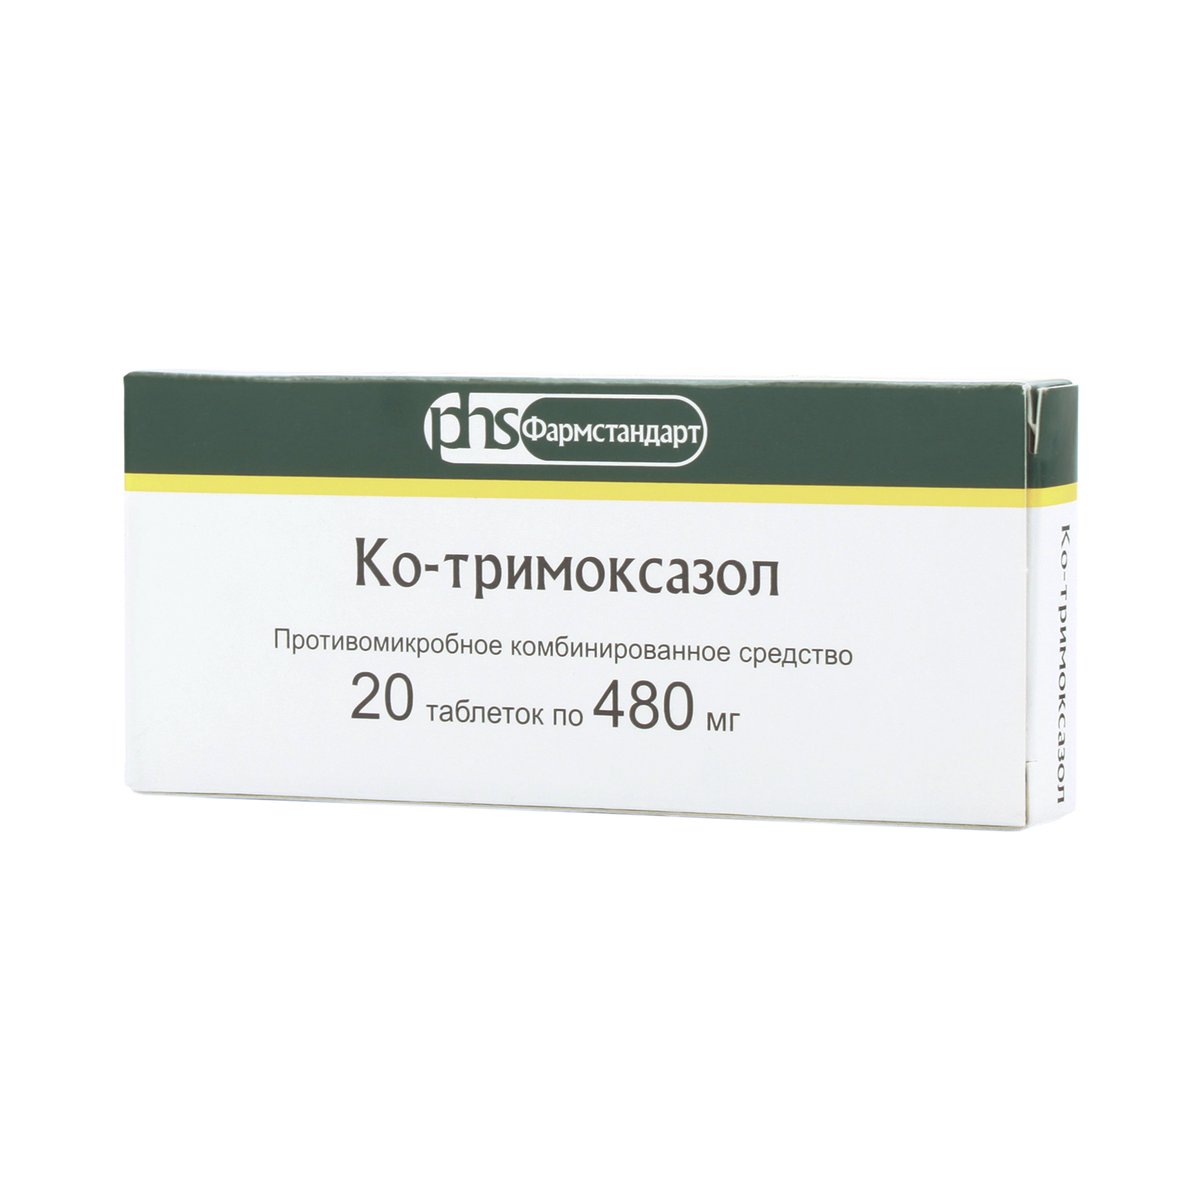 Ко-тримоксазол фармстандарт (20 шт, 480 мг) - цена,  онлайн в .